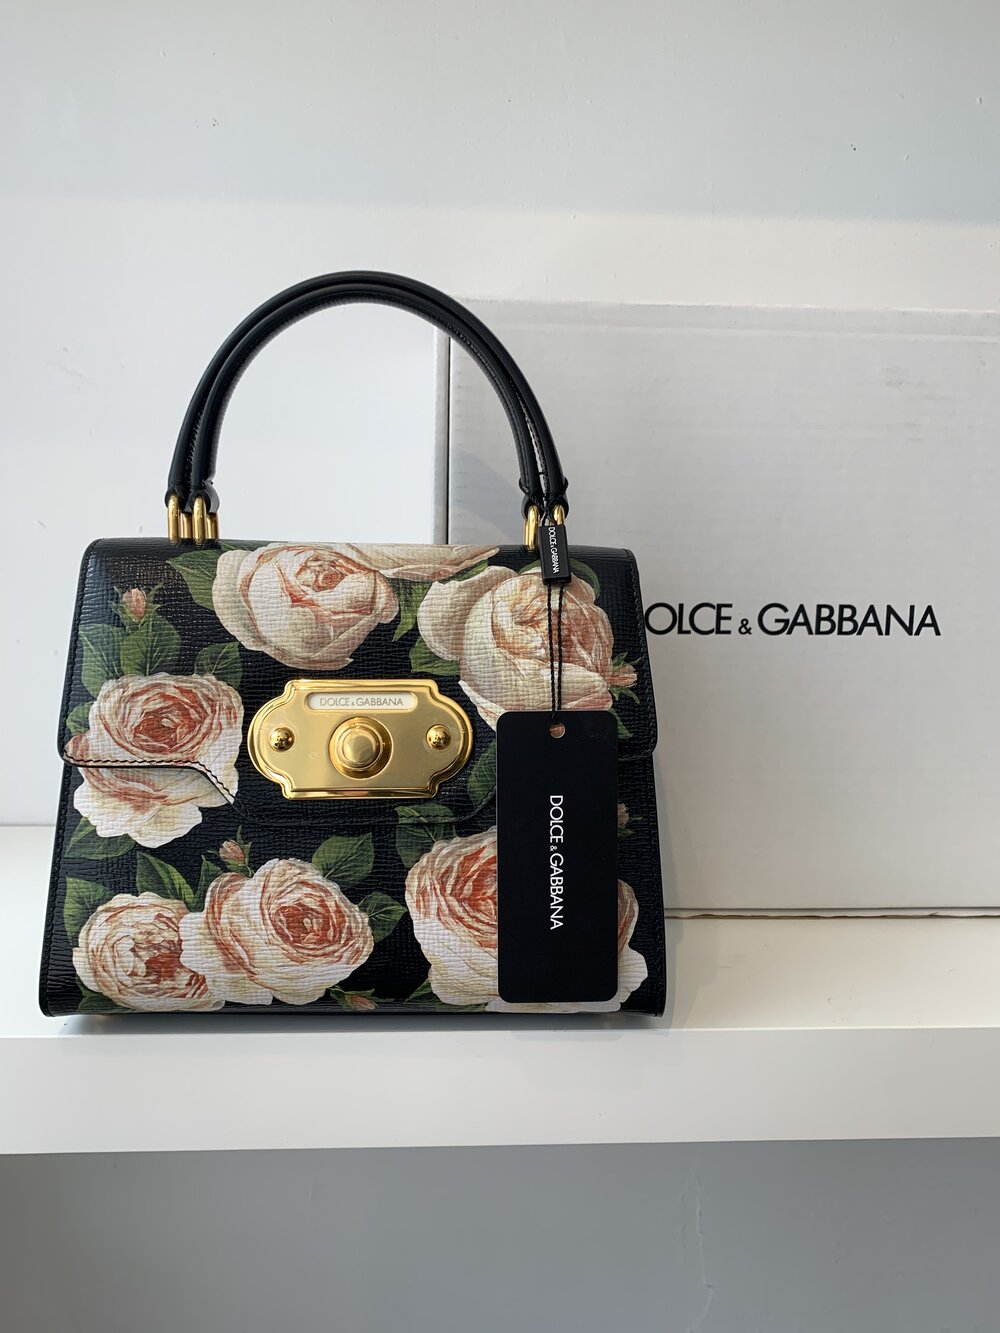 Dolce and Gabbana Welcome Floral Shoulder Bag